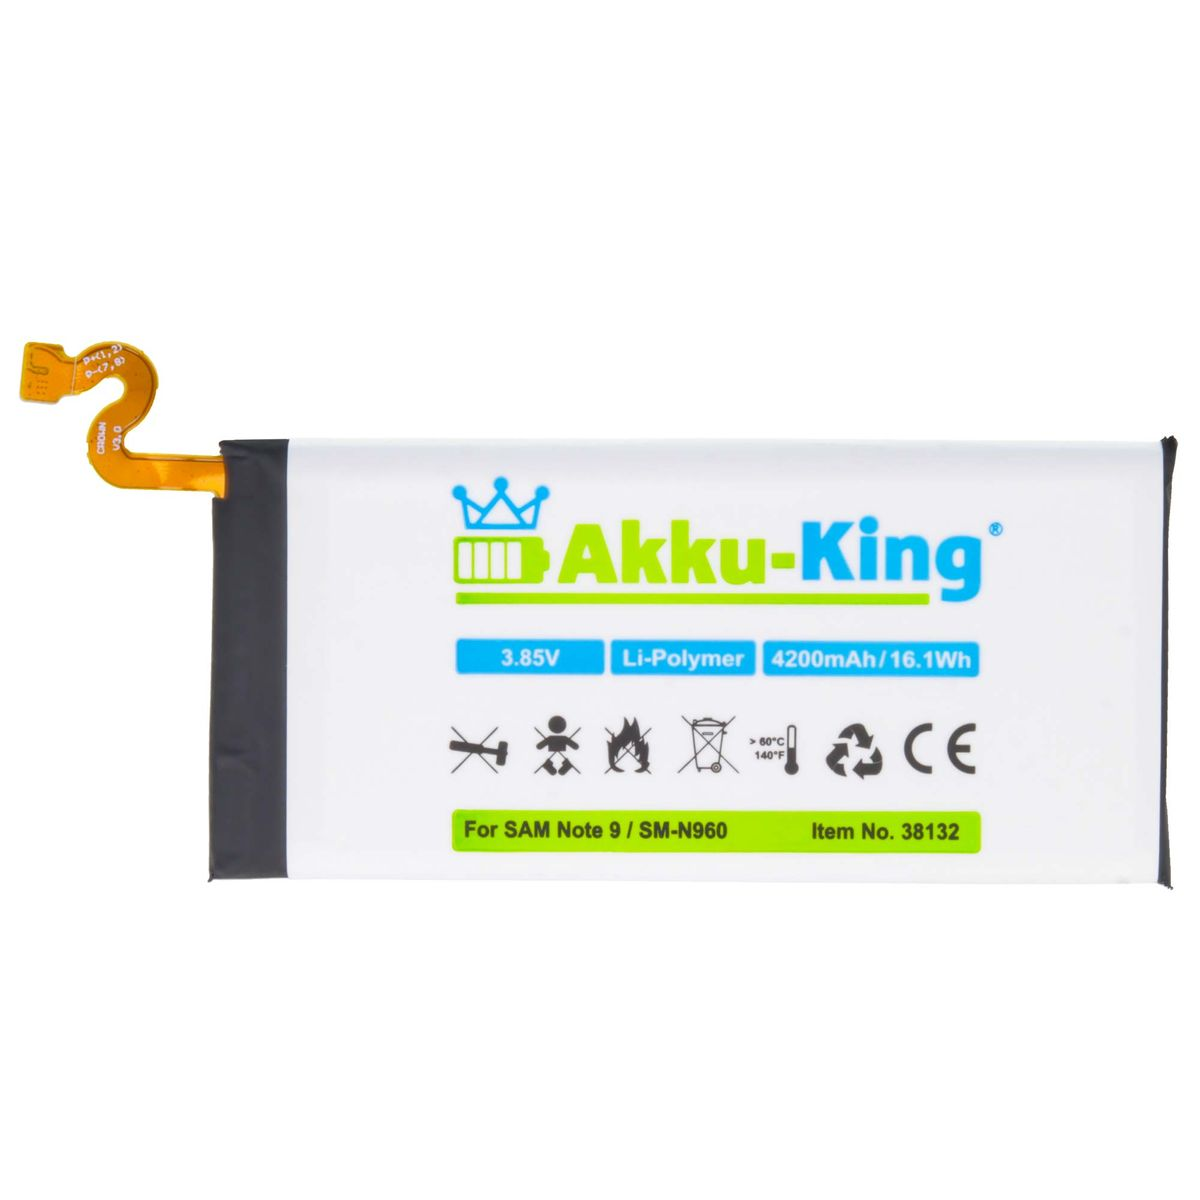 4200mAh Volt, kompatibel Handy-Akku, Li-Polymer 3.85 Samsung EB-BN965ABU AKKU-KING Akku mit